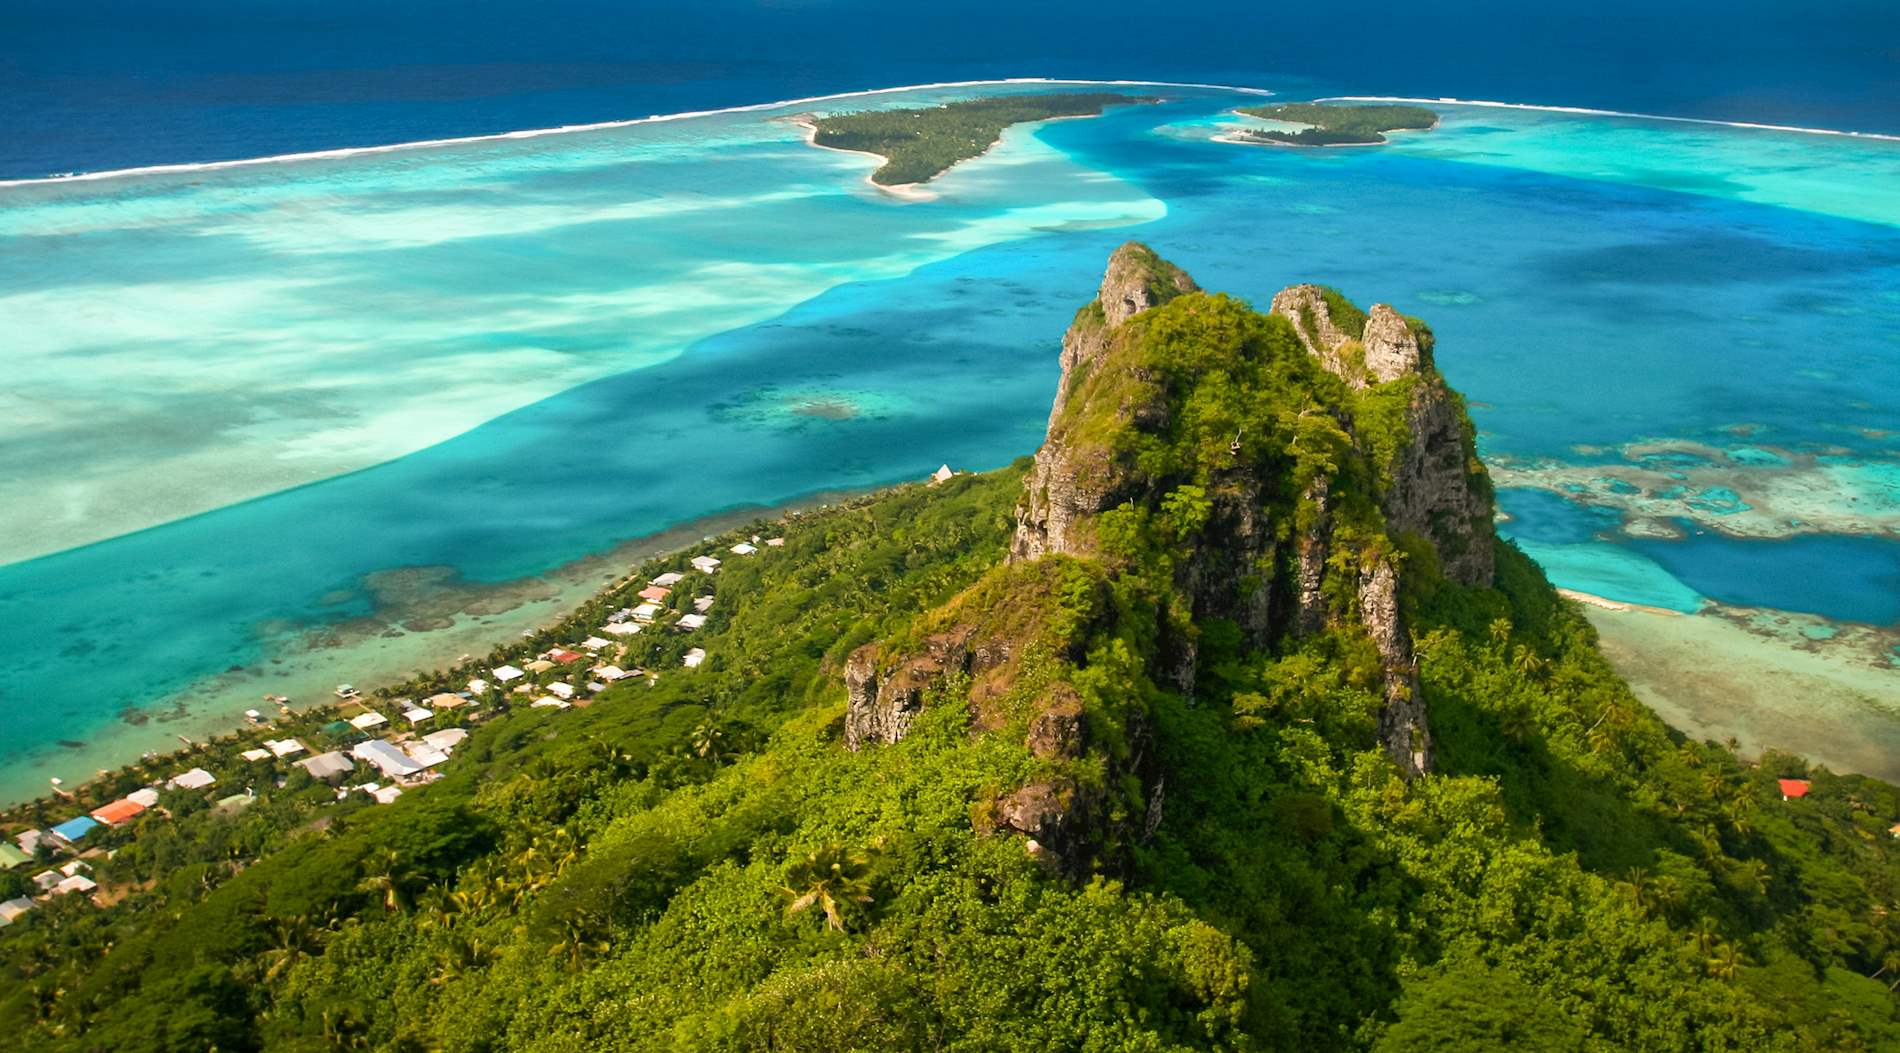 Ала острова. Маупити остров. Острова Океании. Океания острова Полинезии. Таити фото острова.